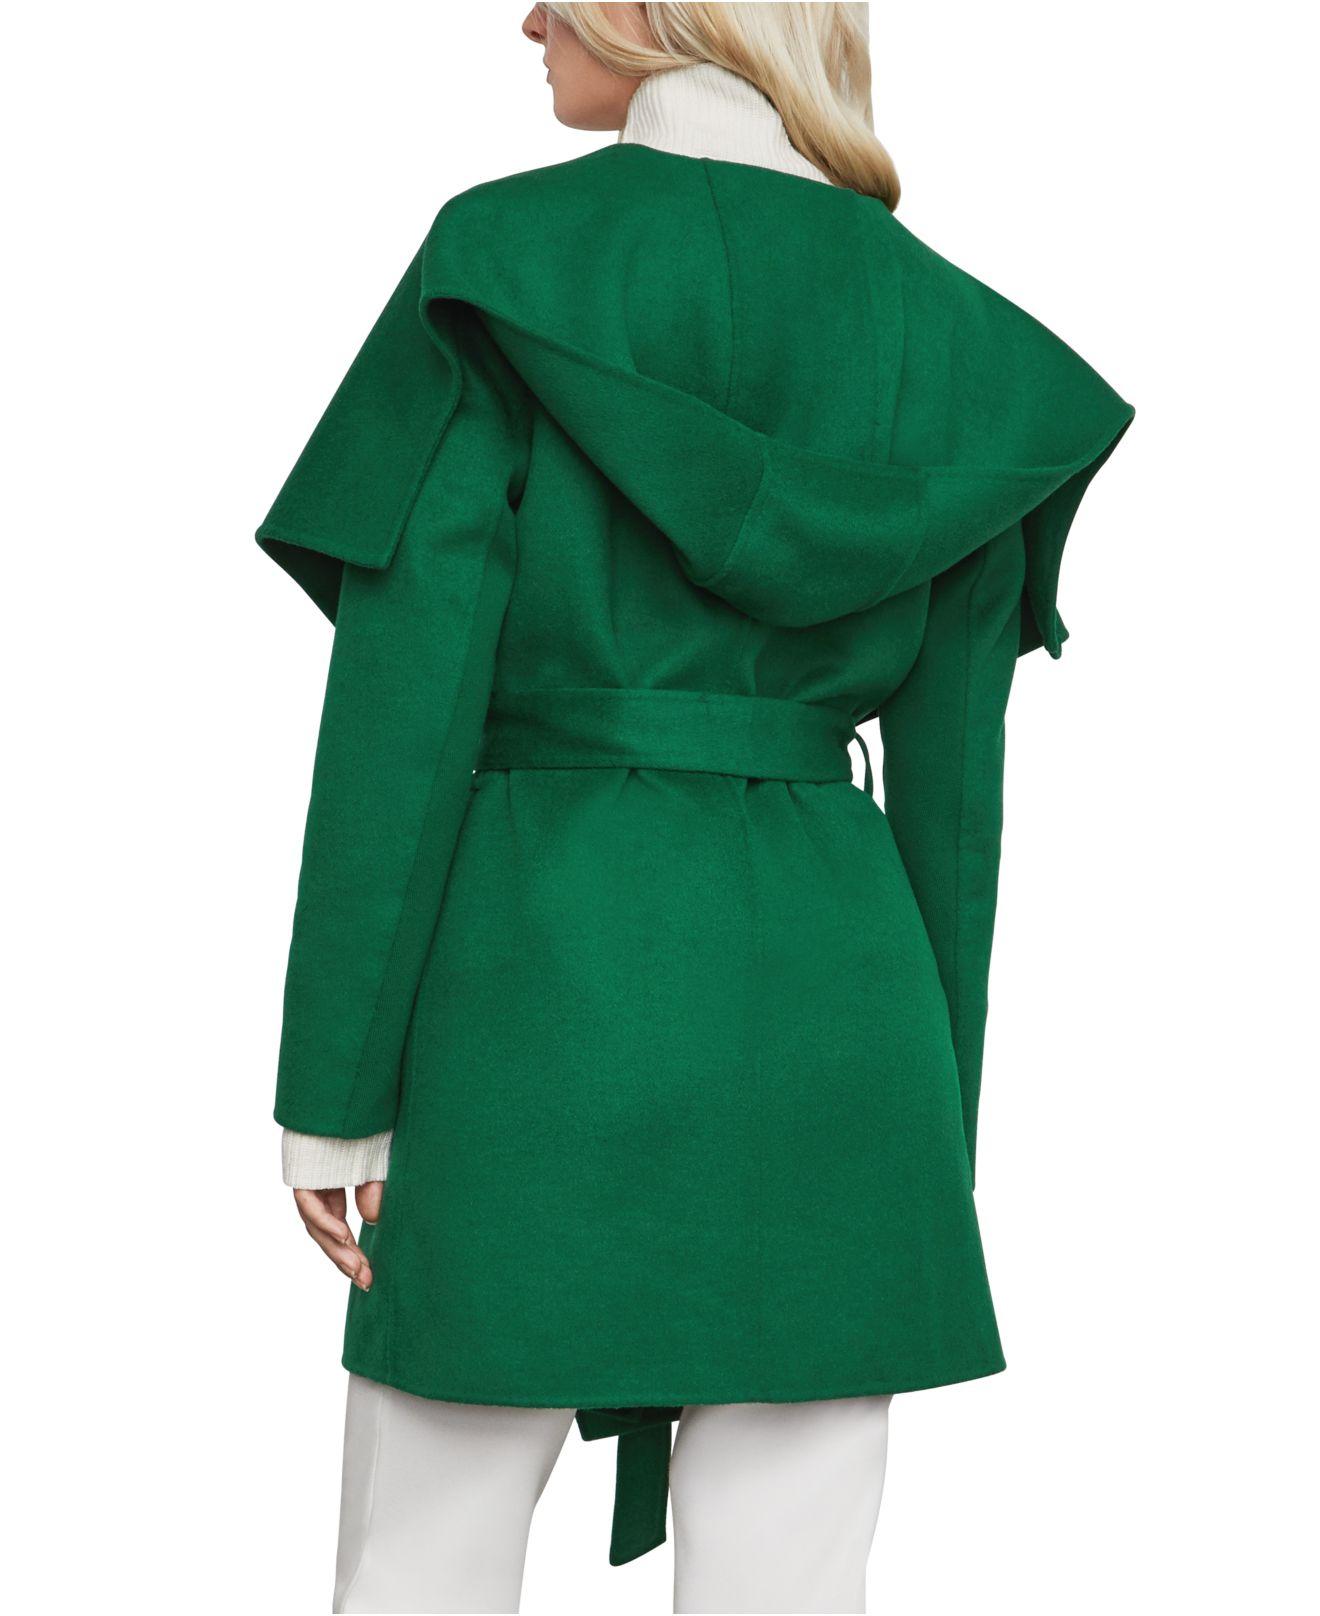 BCBGMAXAZRIA Wool Hooded Wrap Coat in Emerald (Green) - Lyst